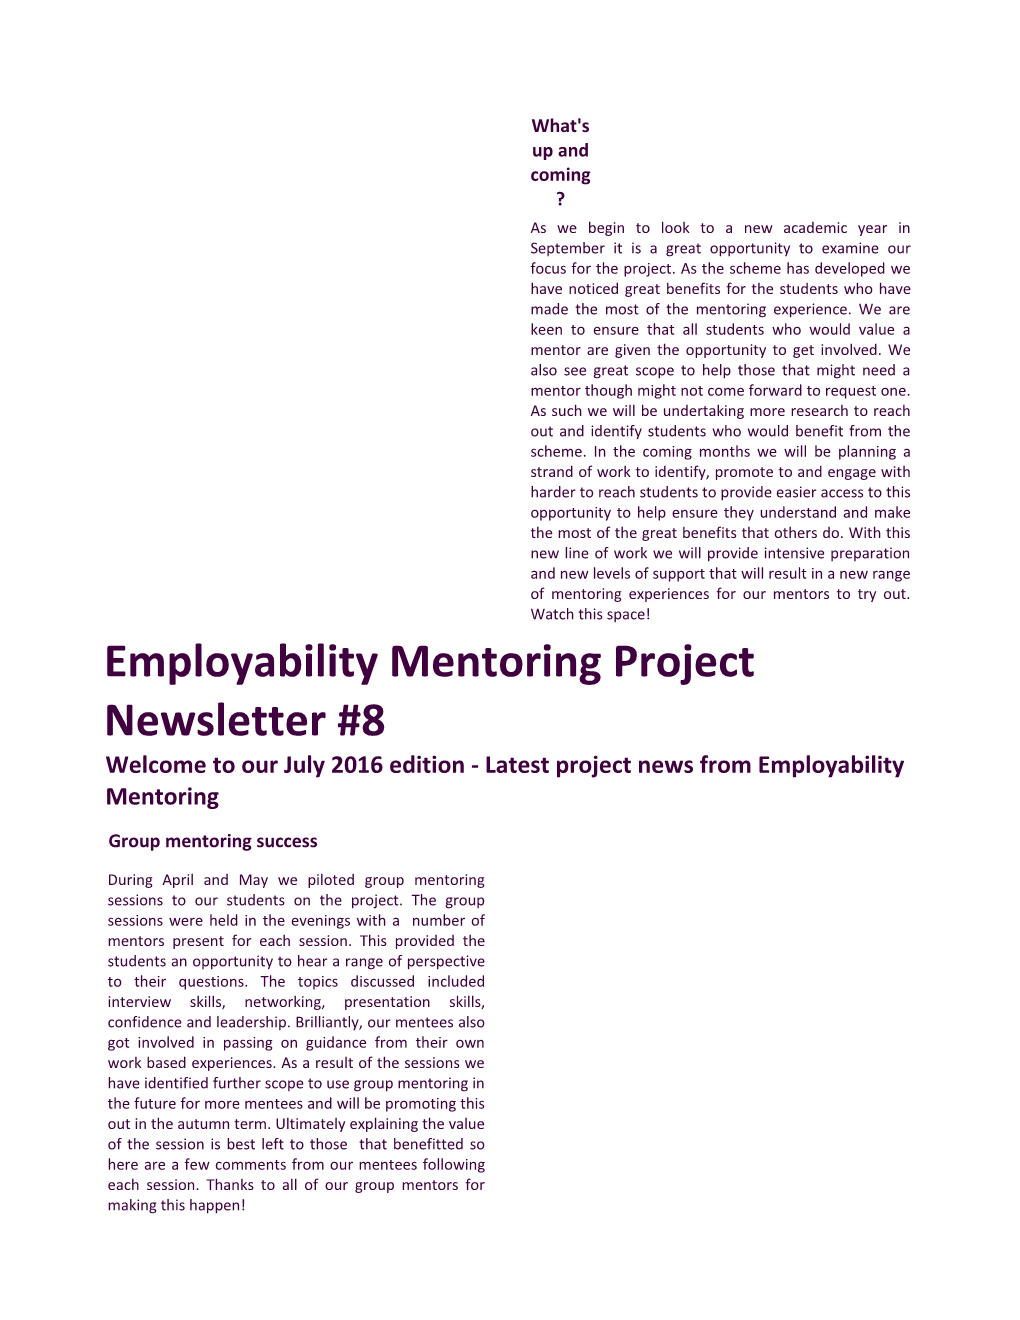 Employability Mentoring Newsletter July 2016